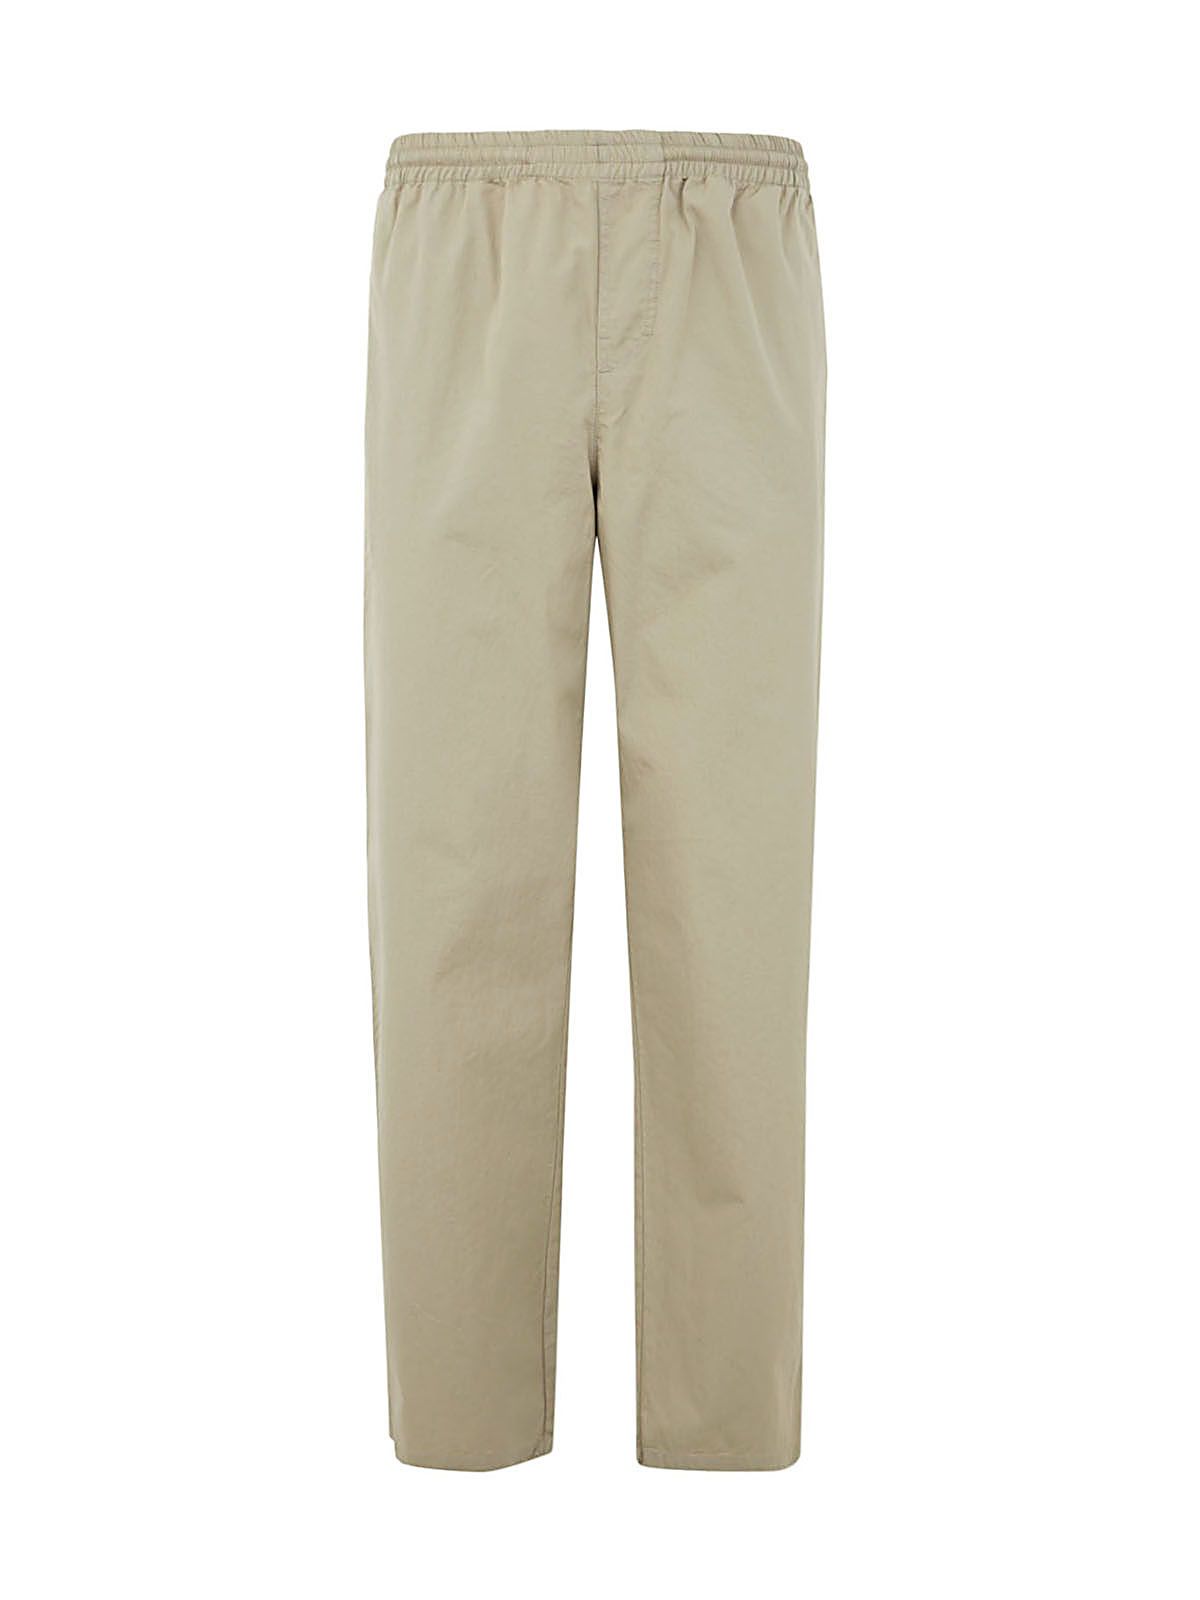 Shop Aspesi Men's Cotton Trousers: Ventura